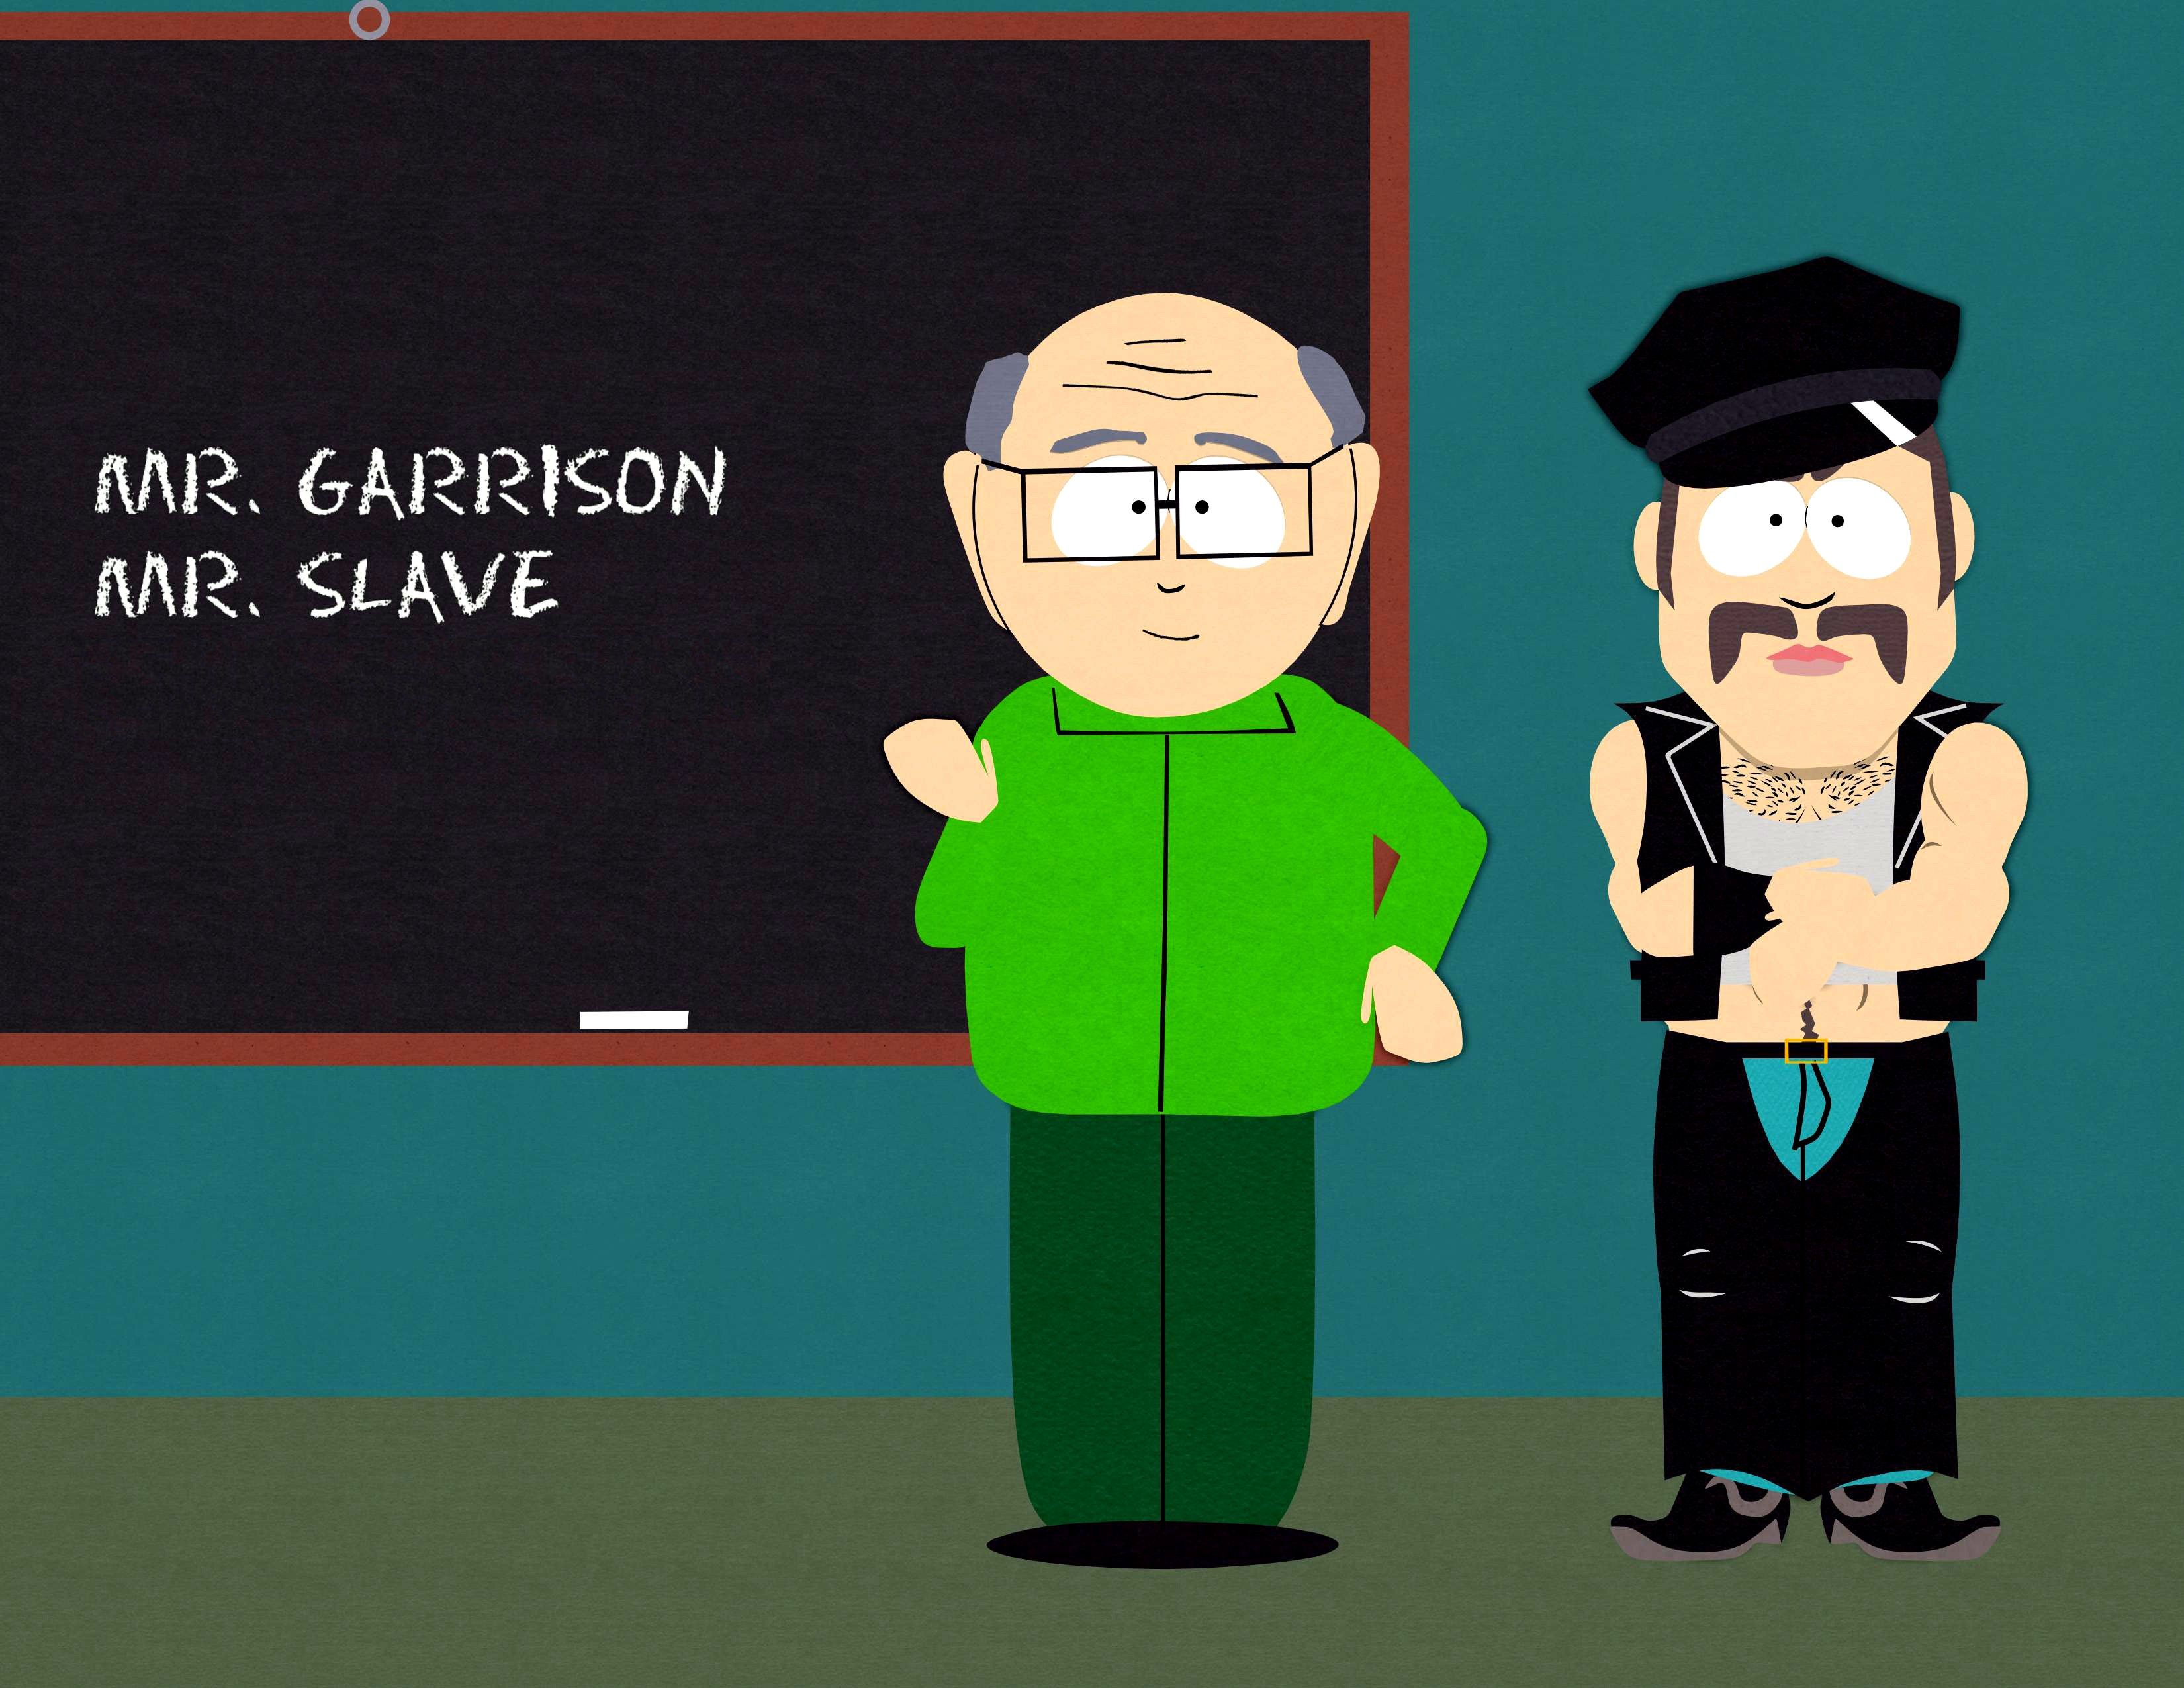 South Park teacher Mr. Garrison brings Mr. Slave to class